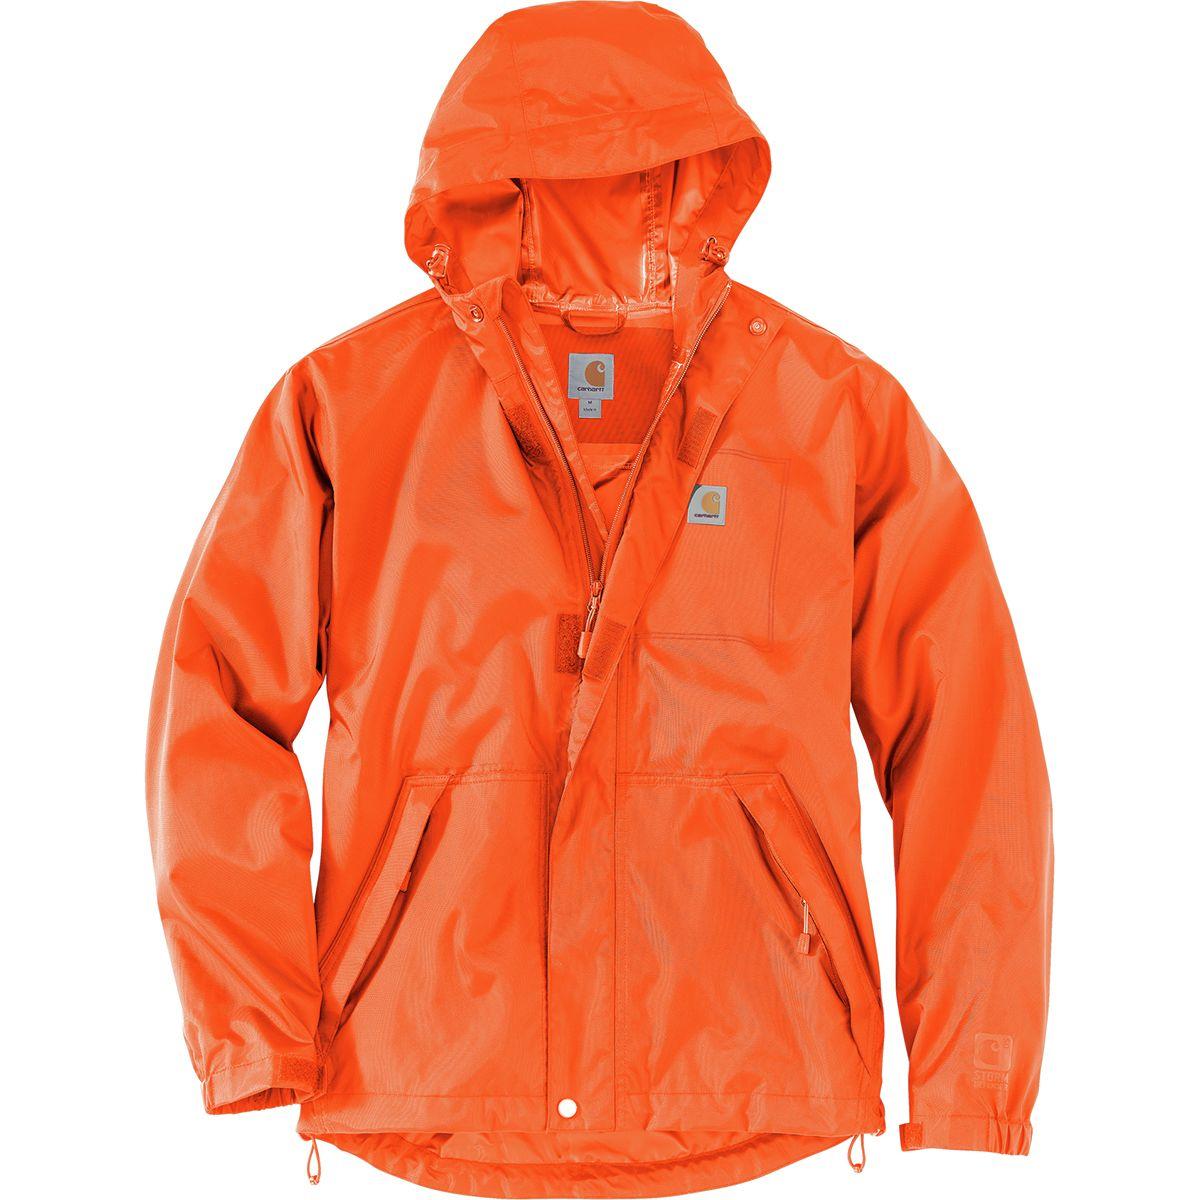 Lyst - Carhartt Dry Harbor Jacket in Orange for Men